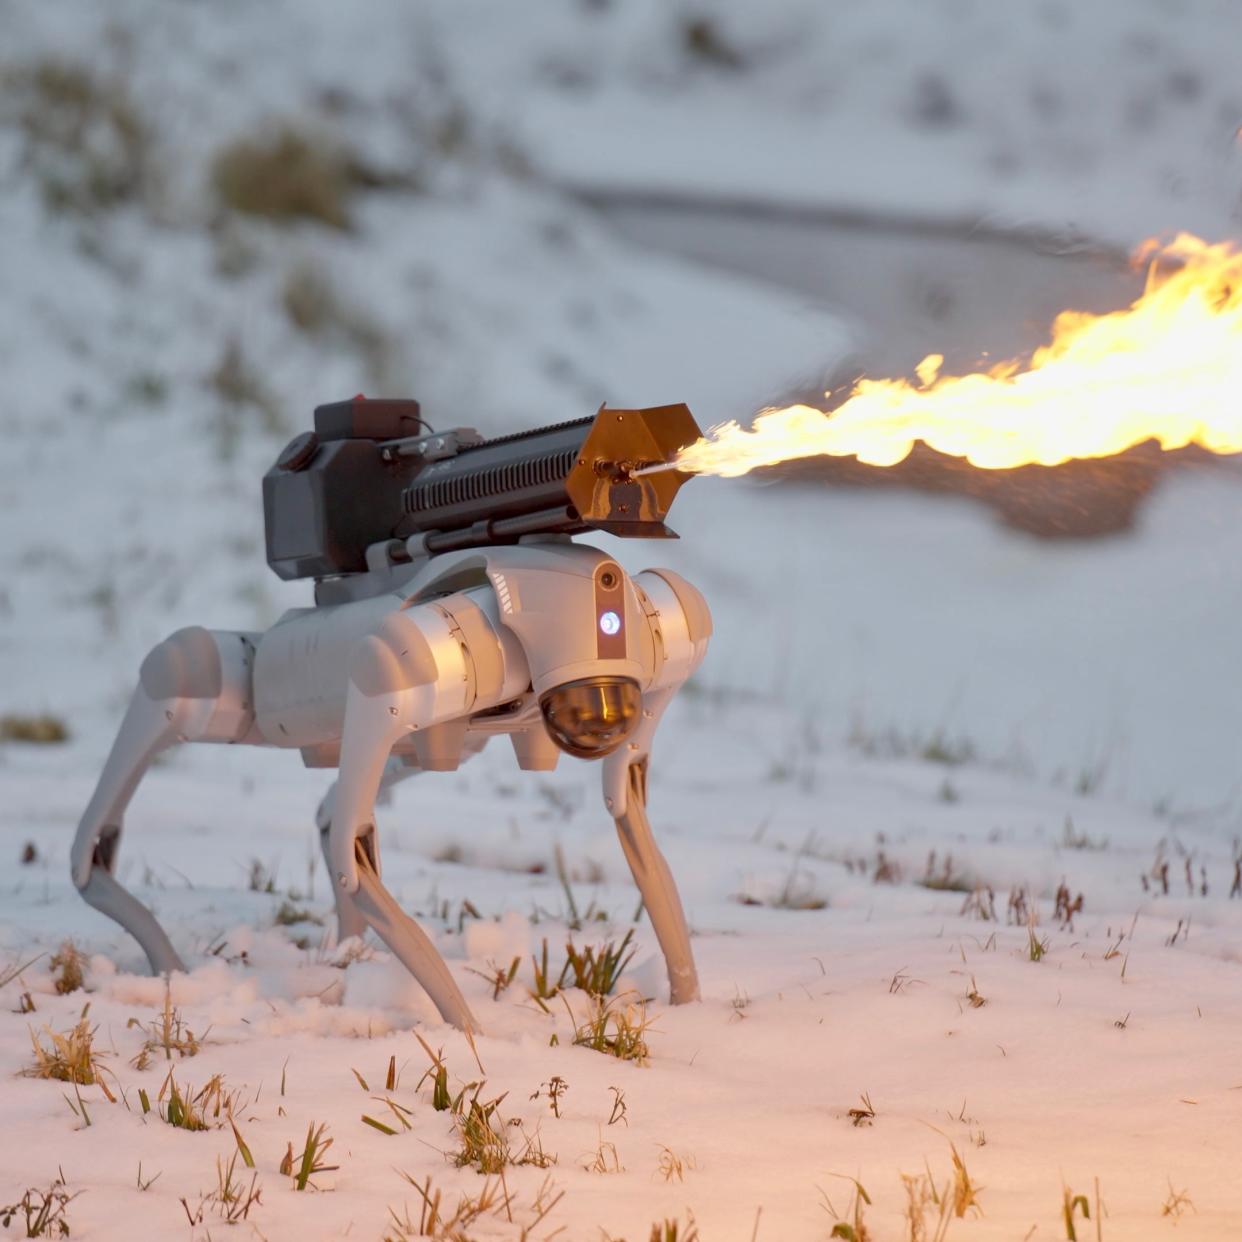 Thermonator flamethrowing robot dog.